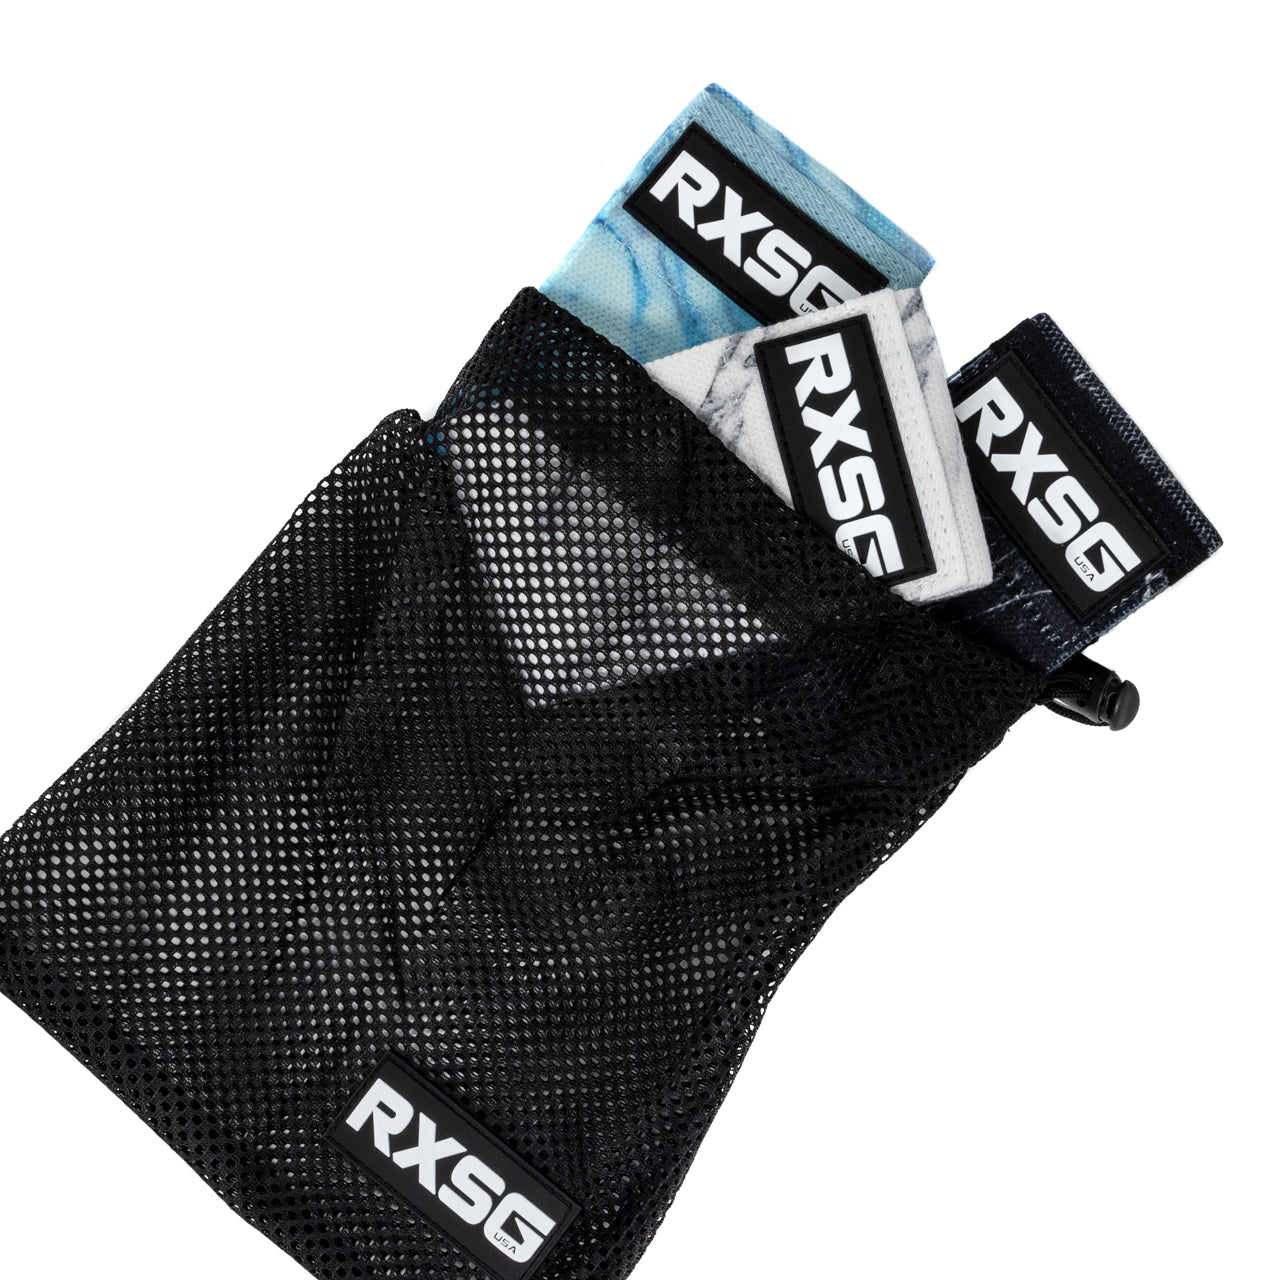 RXSG Booty Bands Bundle in mesh bag